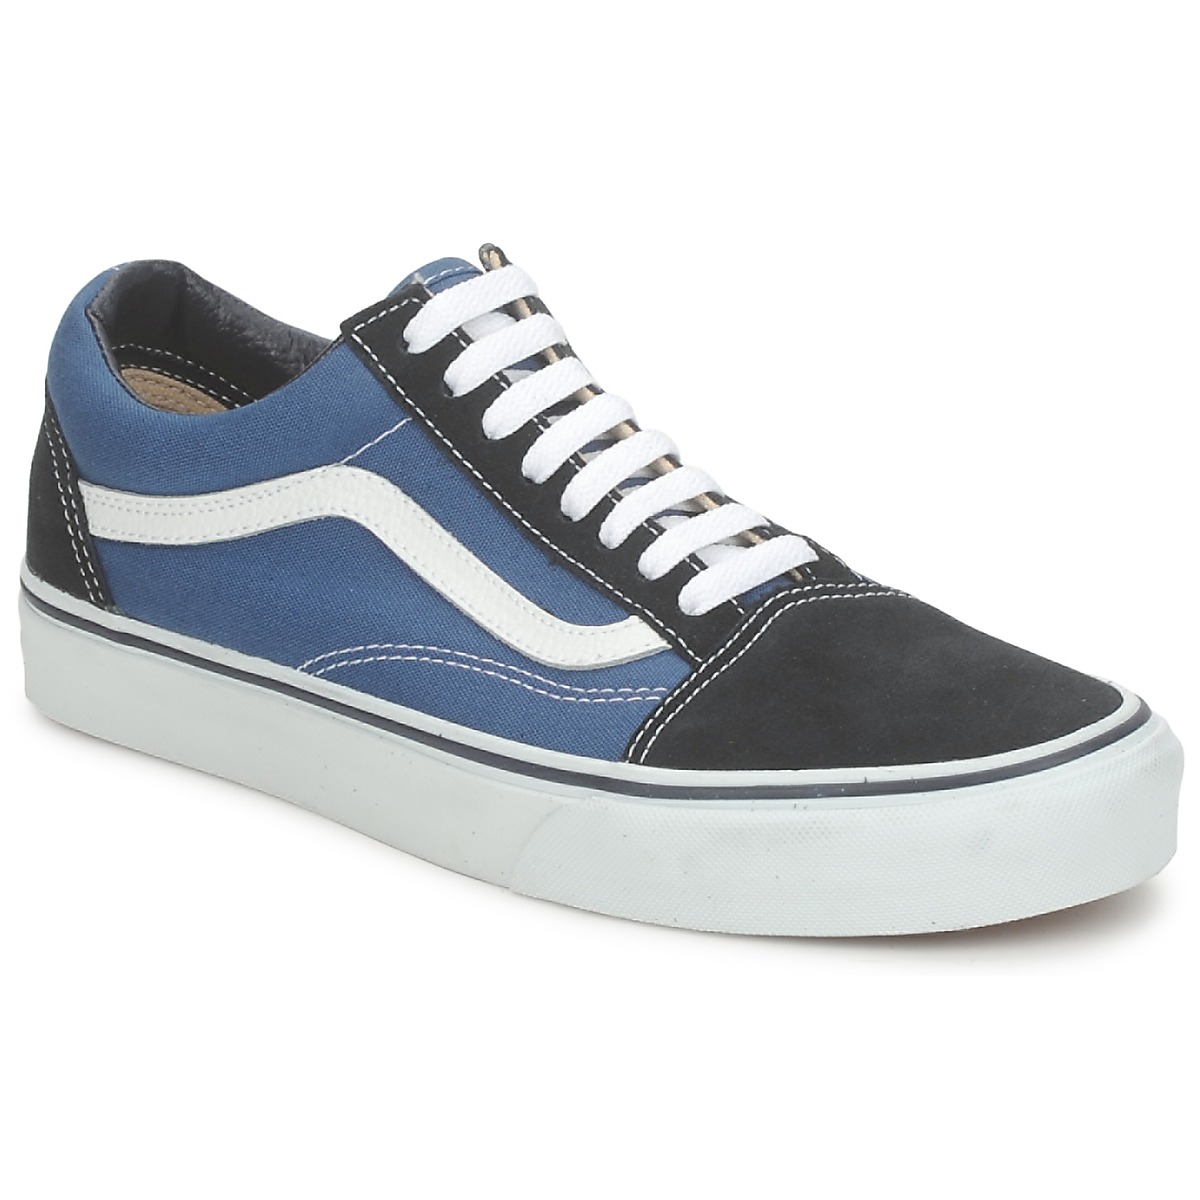 scarpe vans azzurre,New daily offers,imerhow.com راض